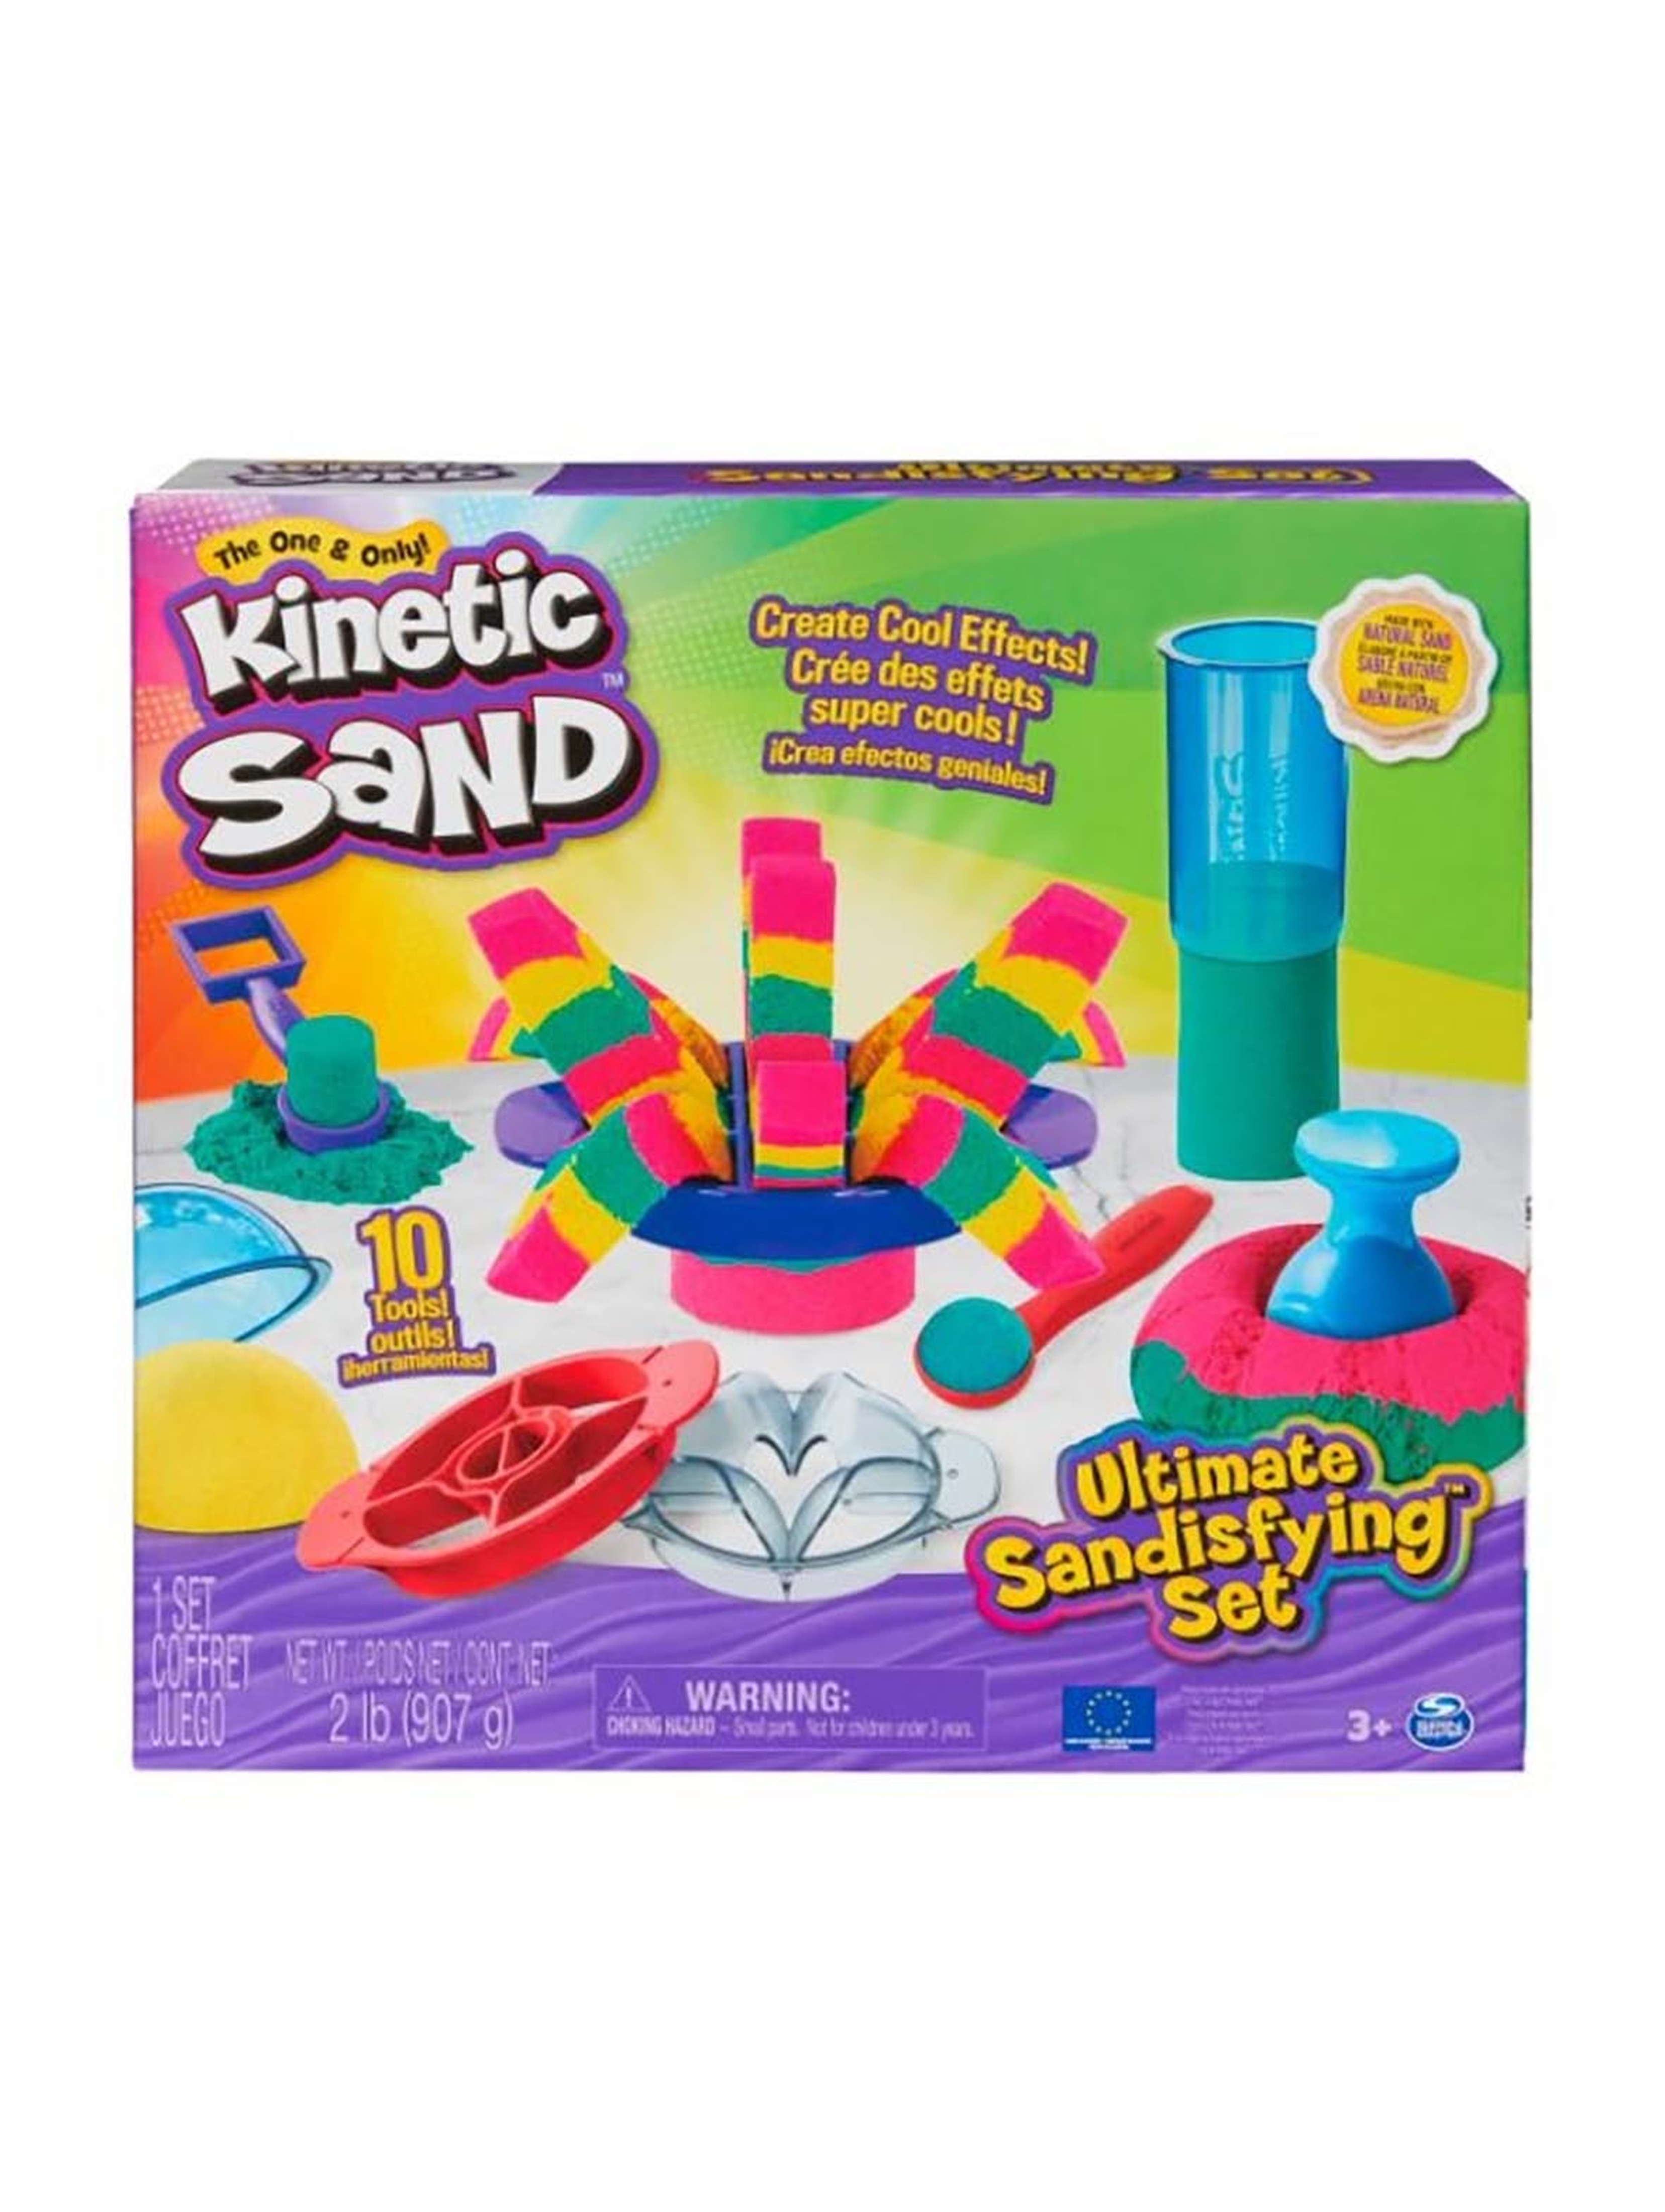 Satysfakcjonujący Zestaw Kinetic Sand